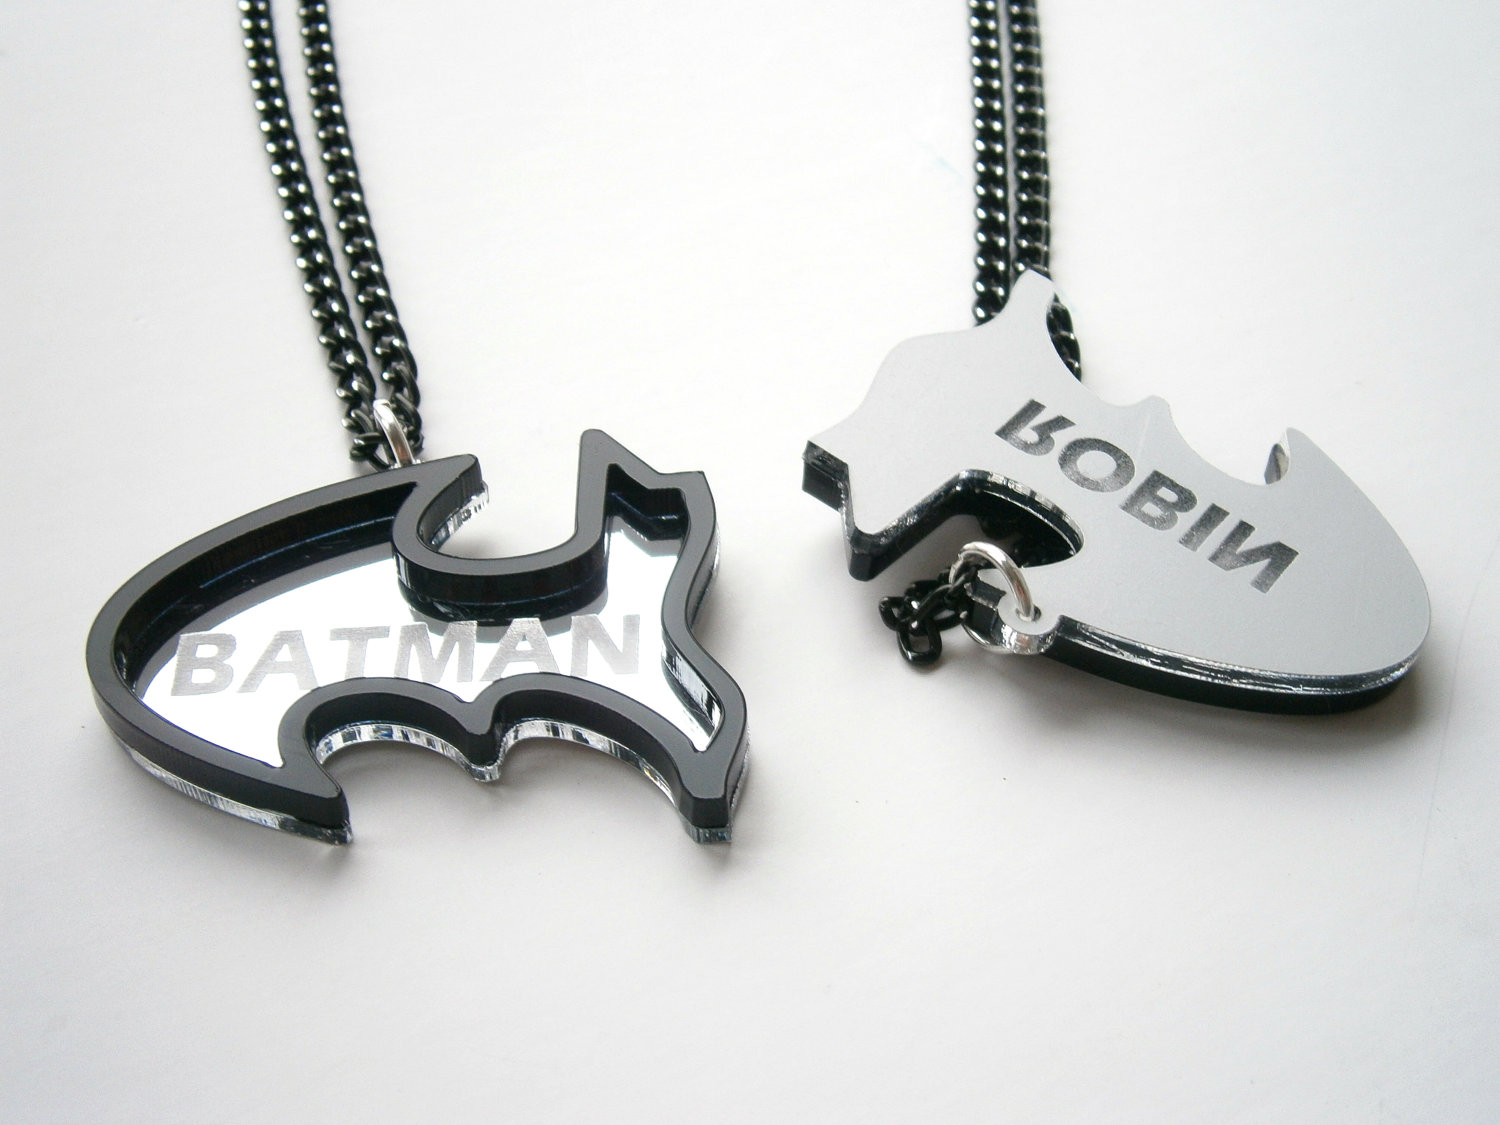 Best Friends Batman Necklaces Inspiring Jewelry! SALE